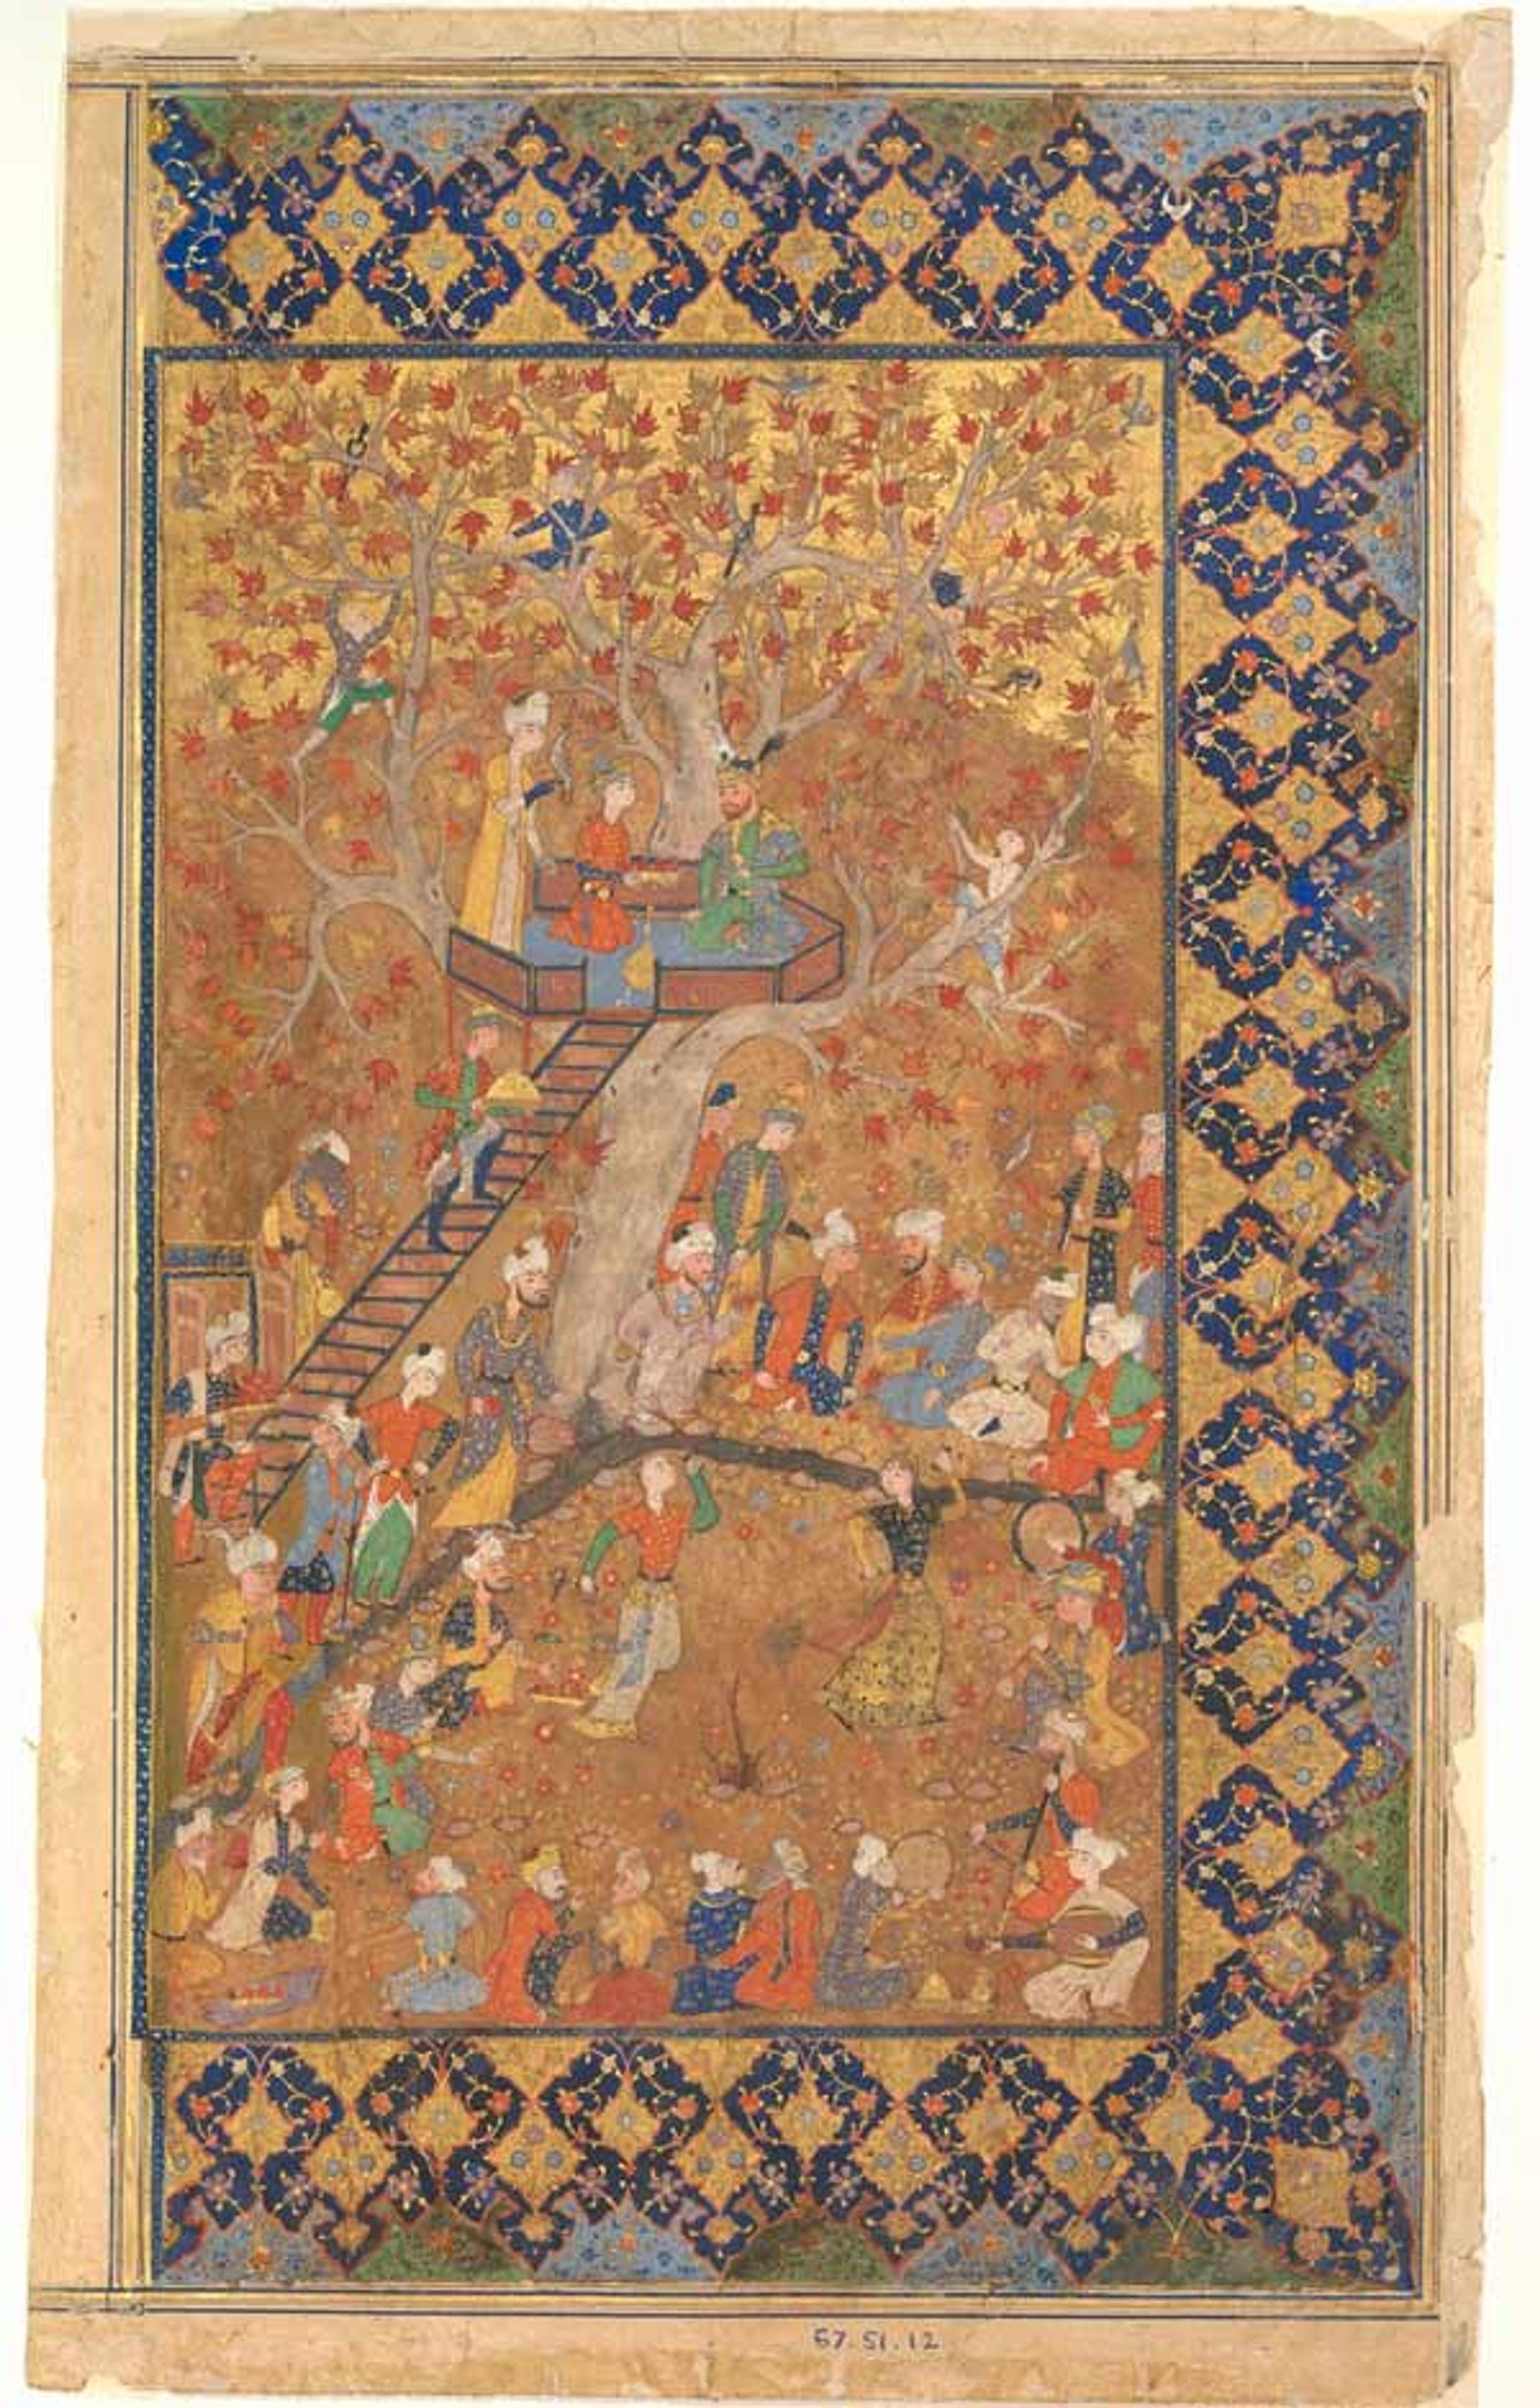 Folio from a Khamsa